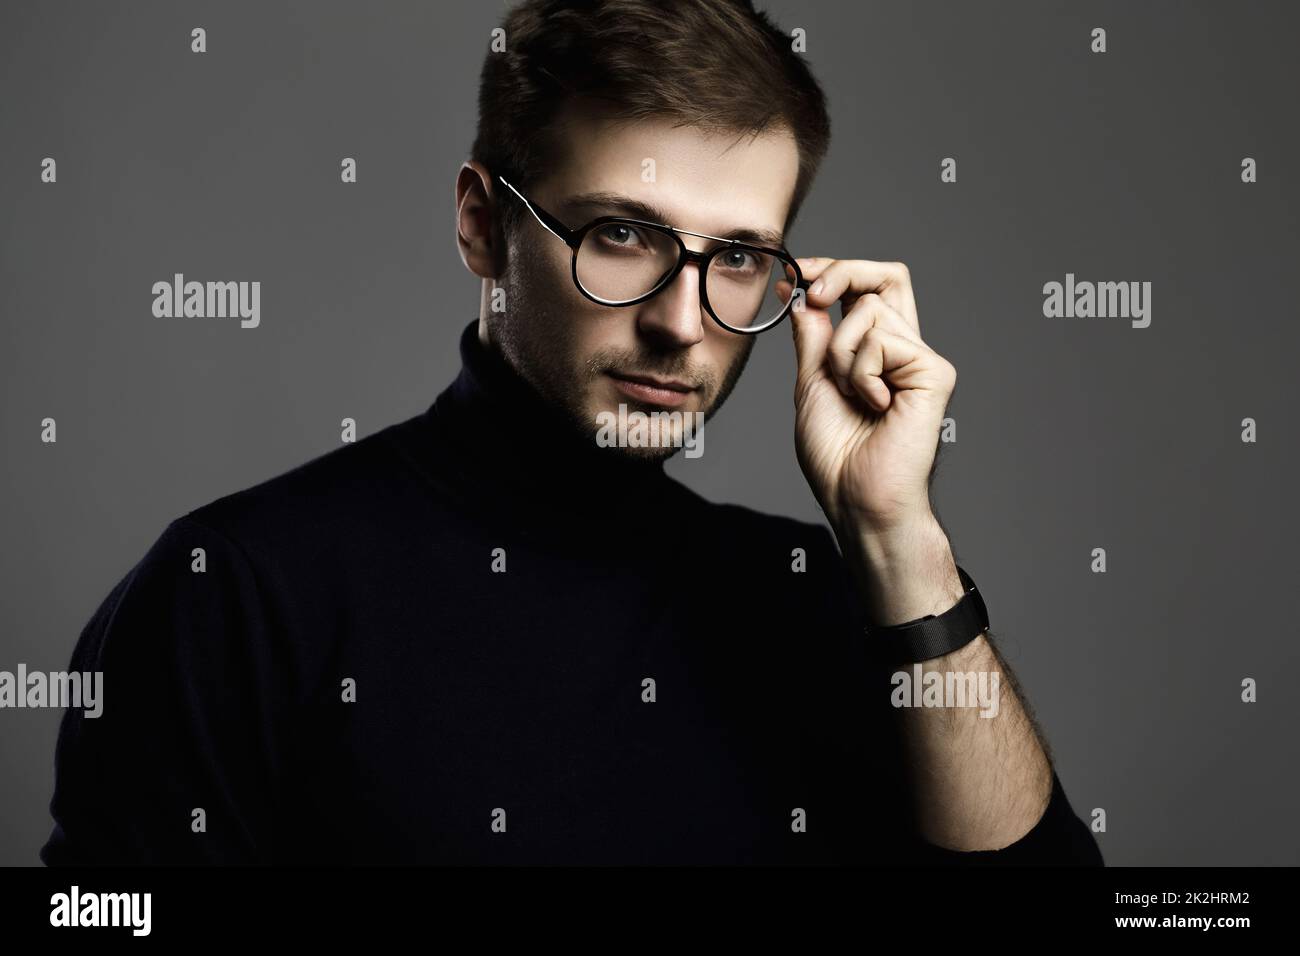 Young intelligent man wearing turtleneck and eyeglasses Stock Photo